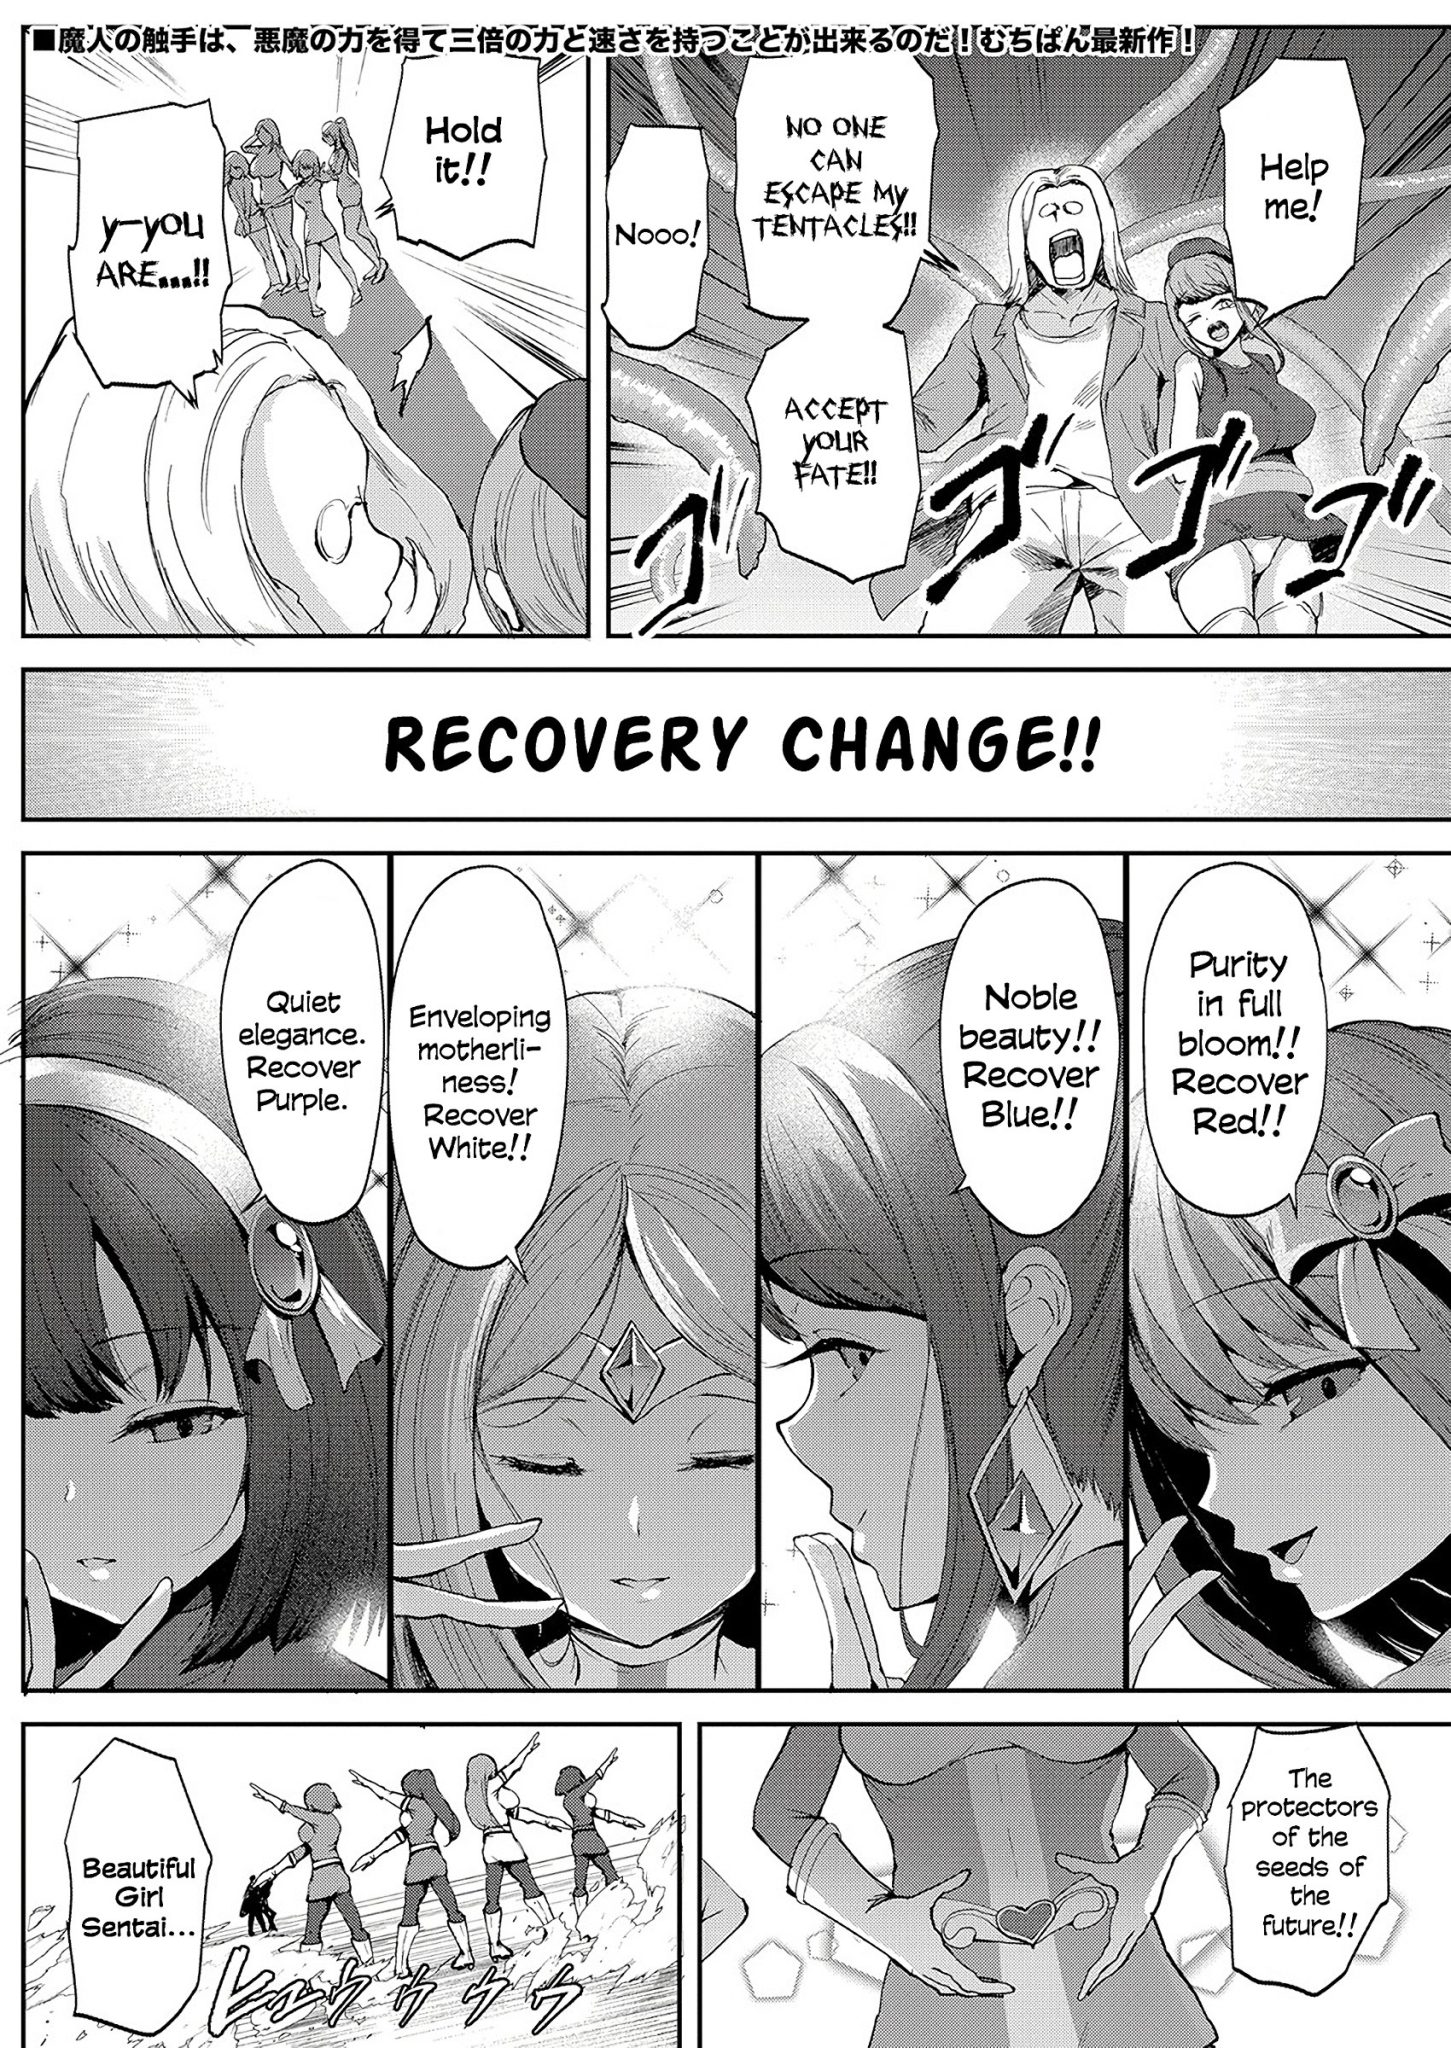 Beautiful Girl Sentai Recoveranger